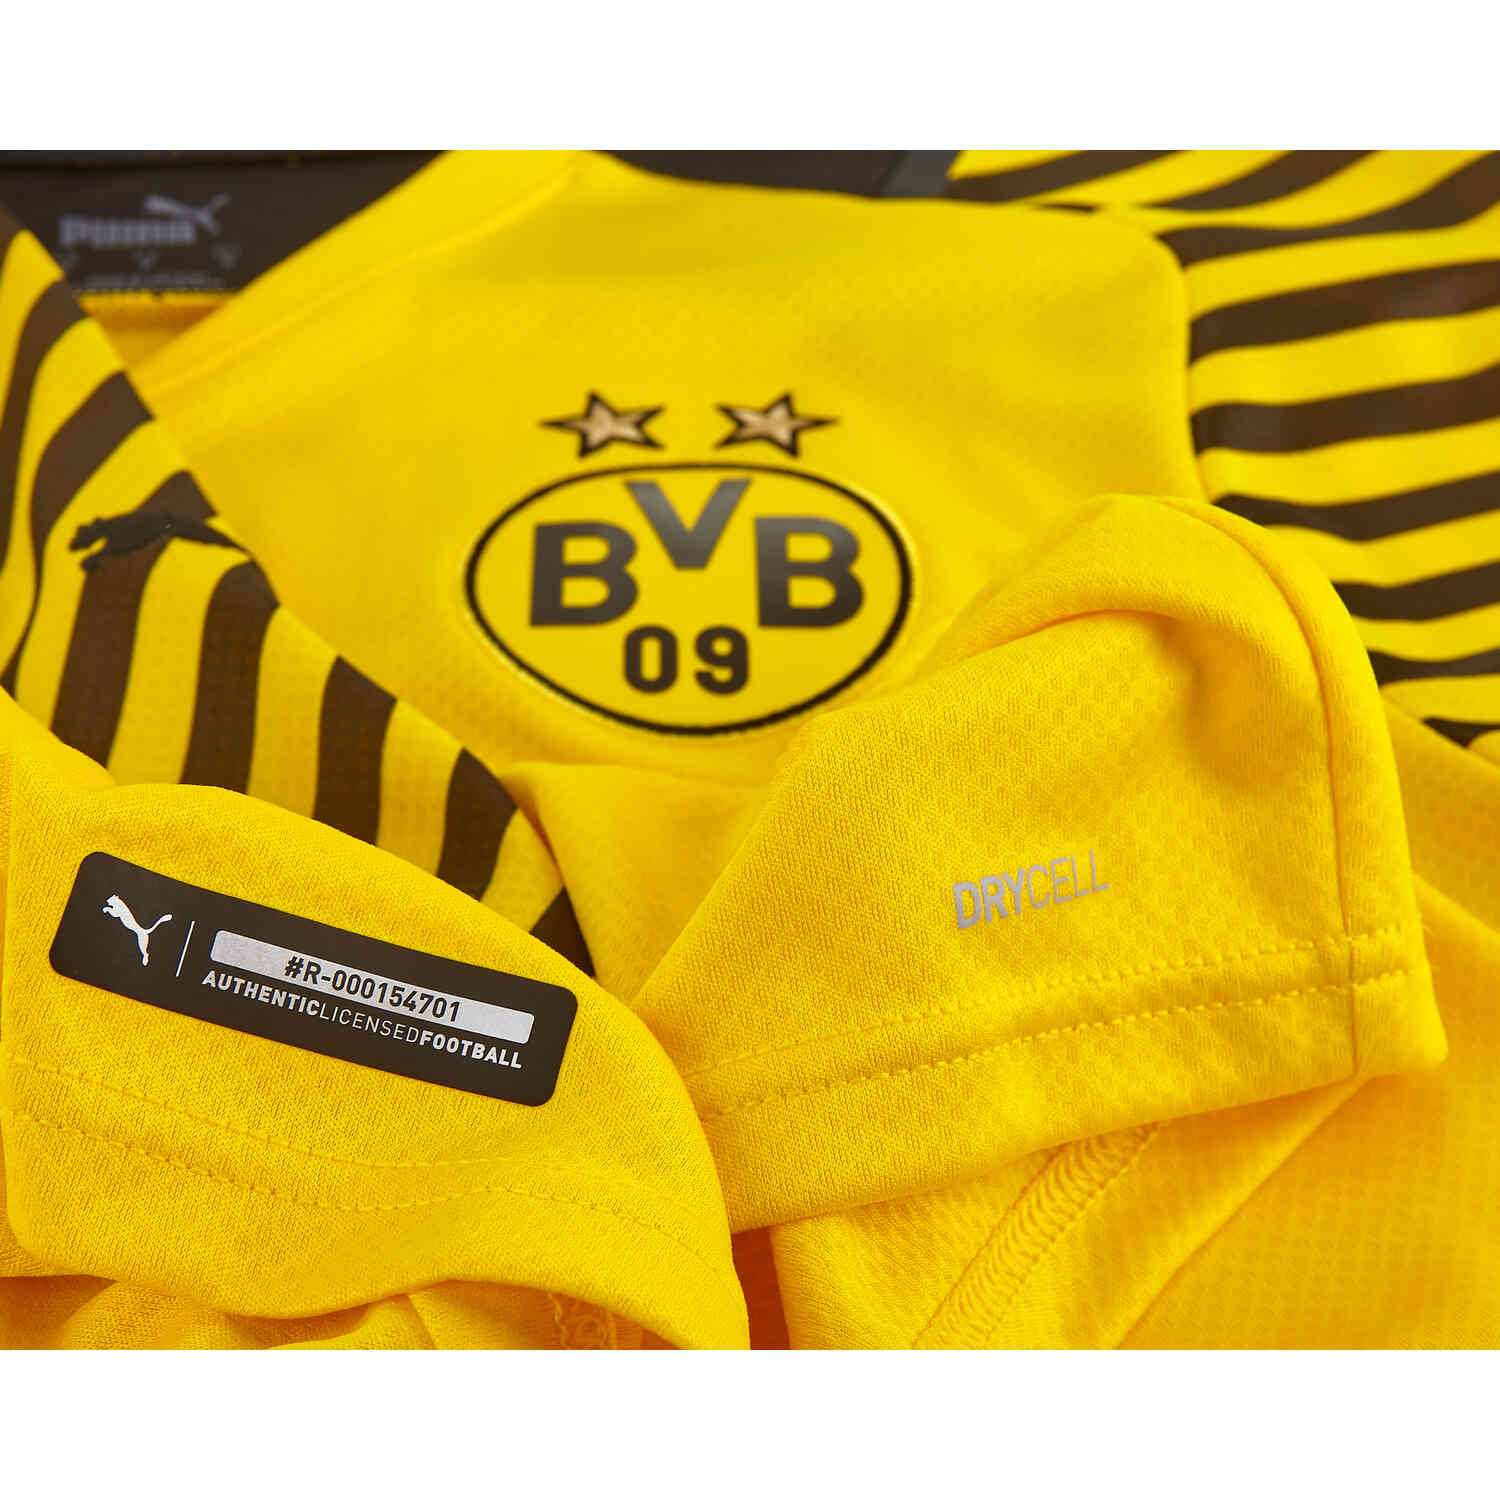 Puma Borussia Dortmund camiseta 9 Erling Haaland 2021/22 BVB 1&1 1y1 Nuevo  senor S/M/L/XL/XXL futbol maillot tricot maglia comprar tienda online shop  -  retro futbol camiseta maglia maillot tricot online shop